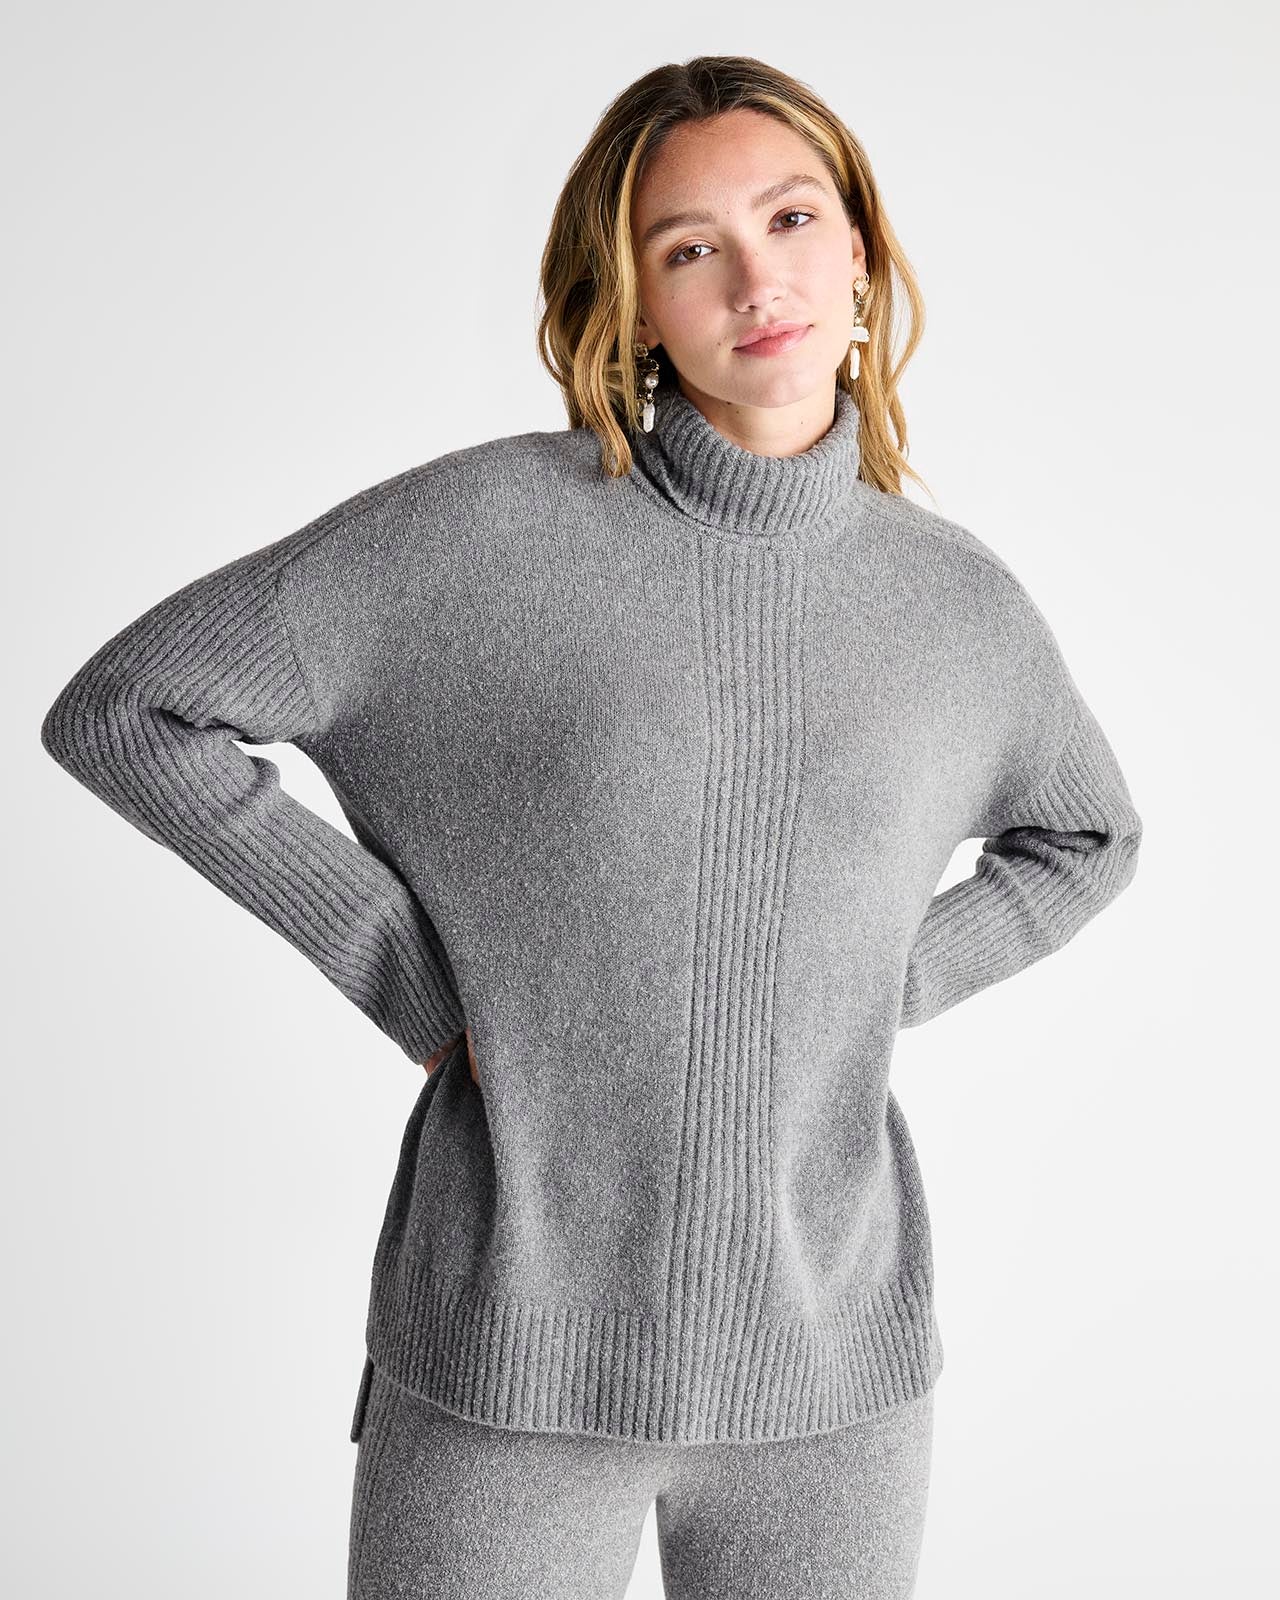 ophelia turtleneck sweater